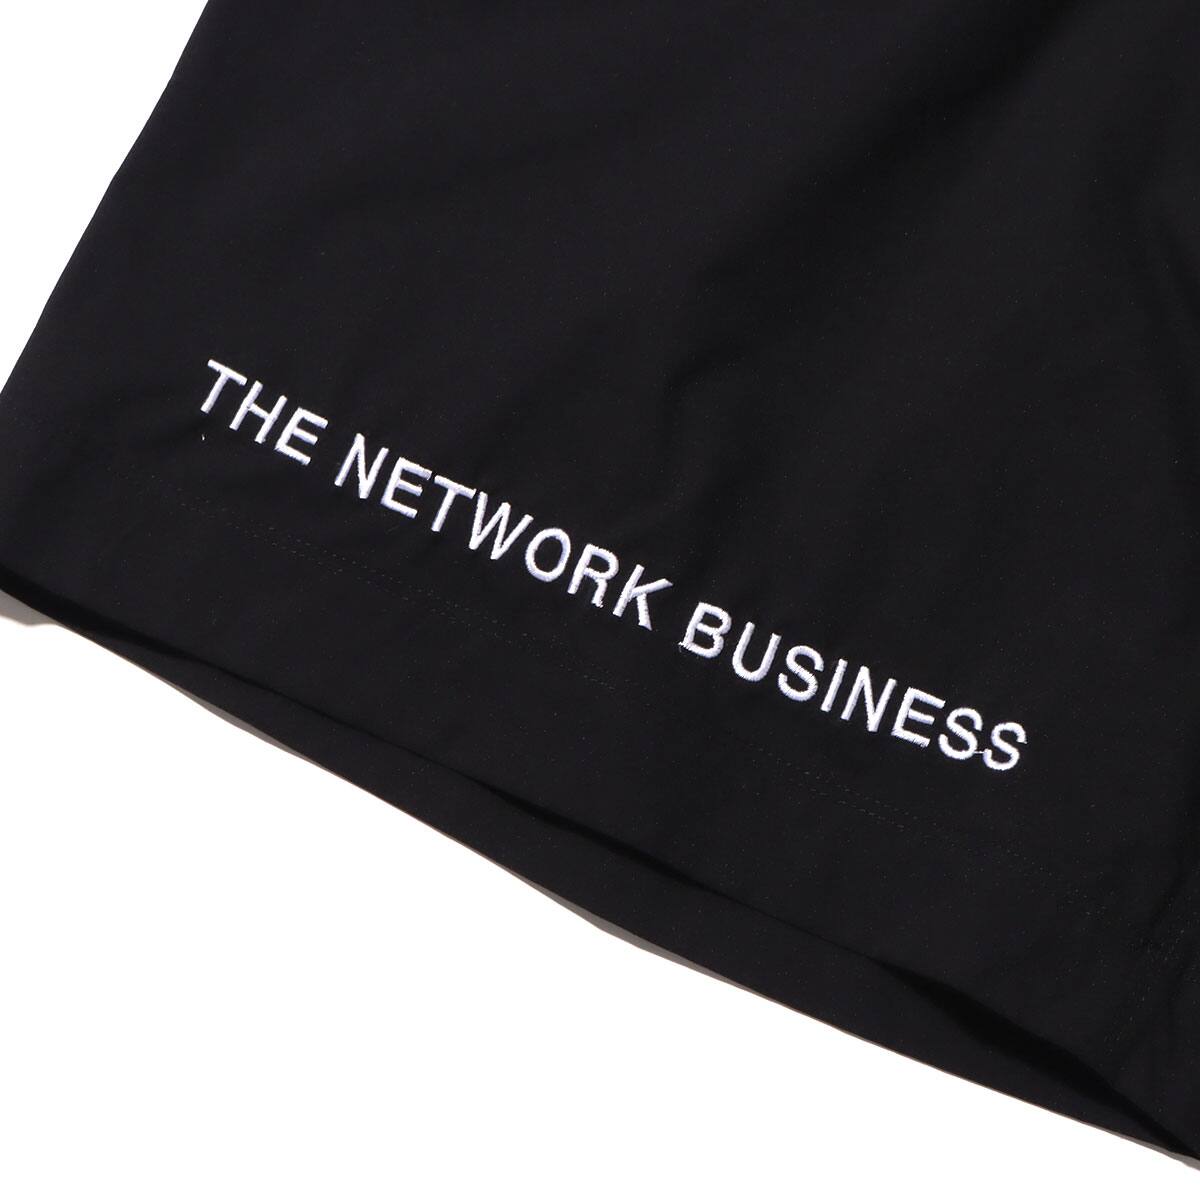 THE NETWORK BUSINESS WING LOGO EMBROIDERY NYLON SHORTS BLACK 22SU-I